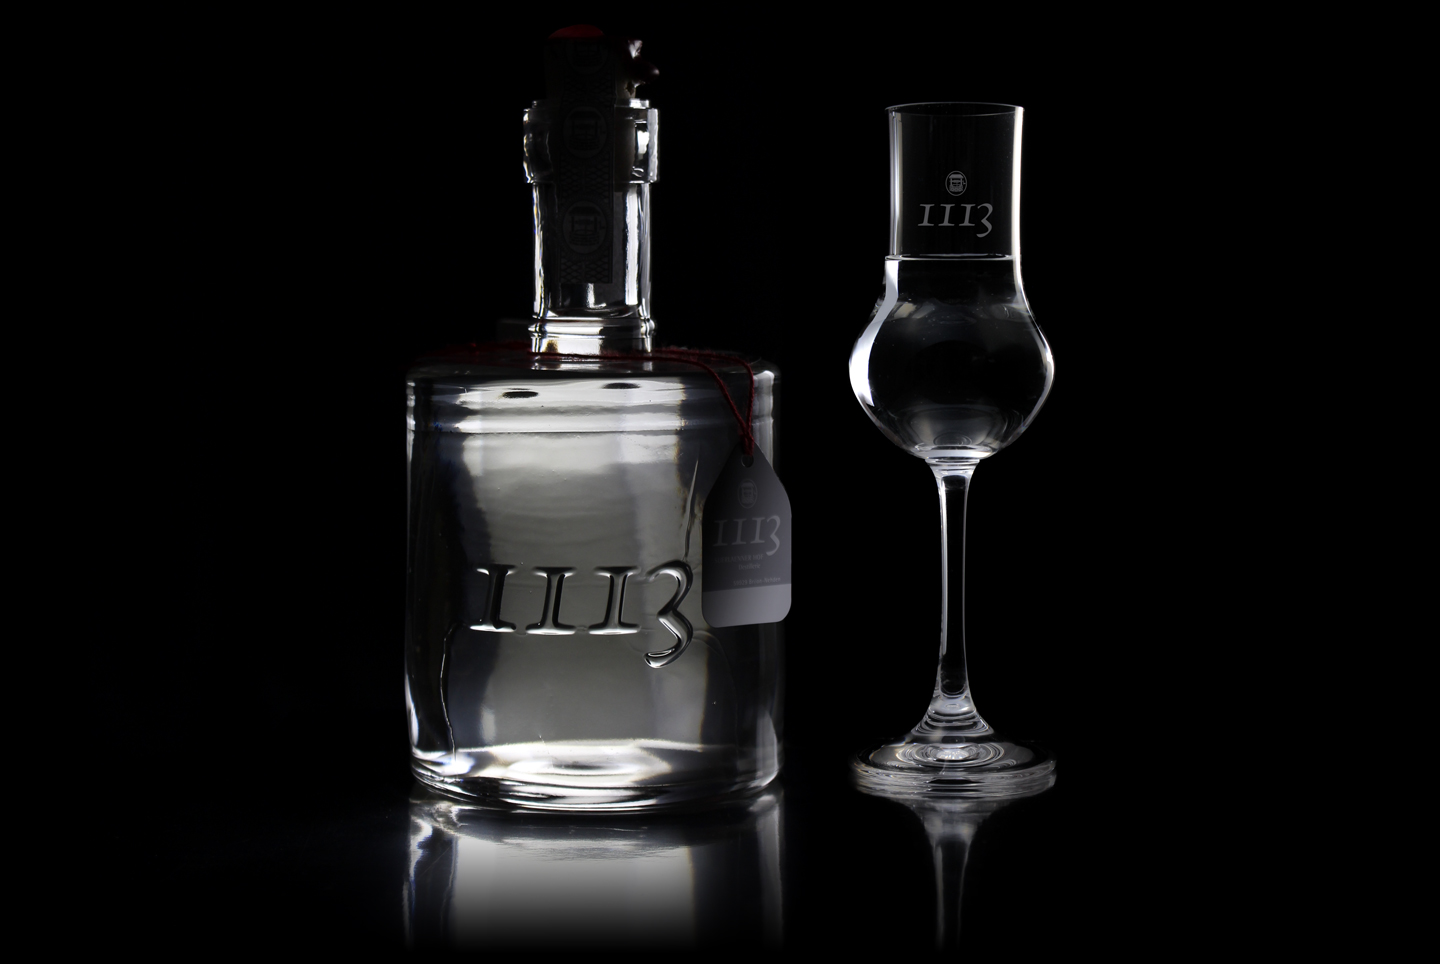 1113 werksdesign destillery bottle packaging glass glassware design